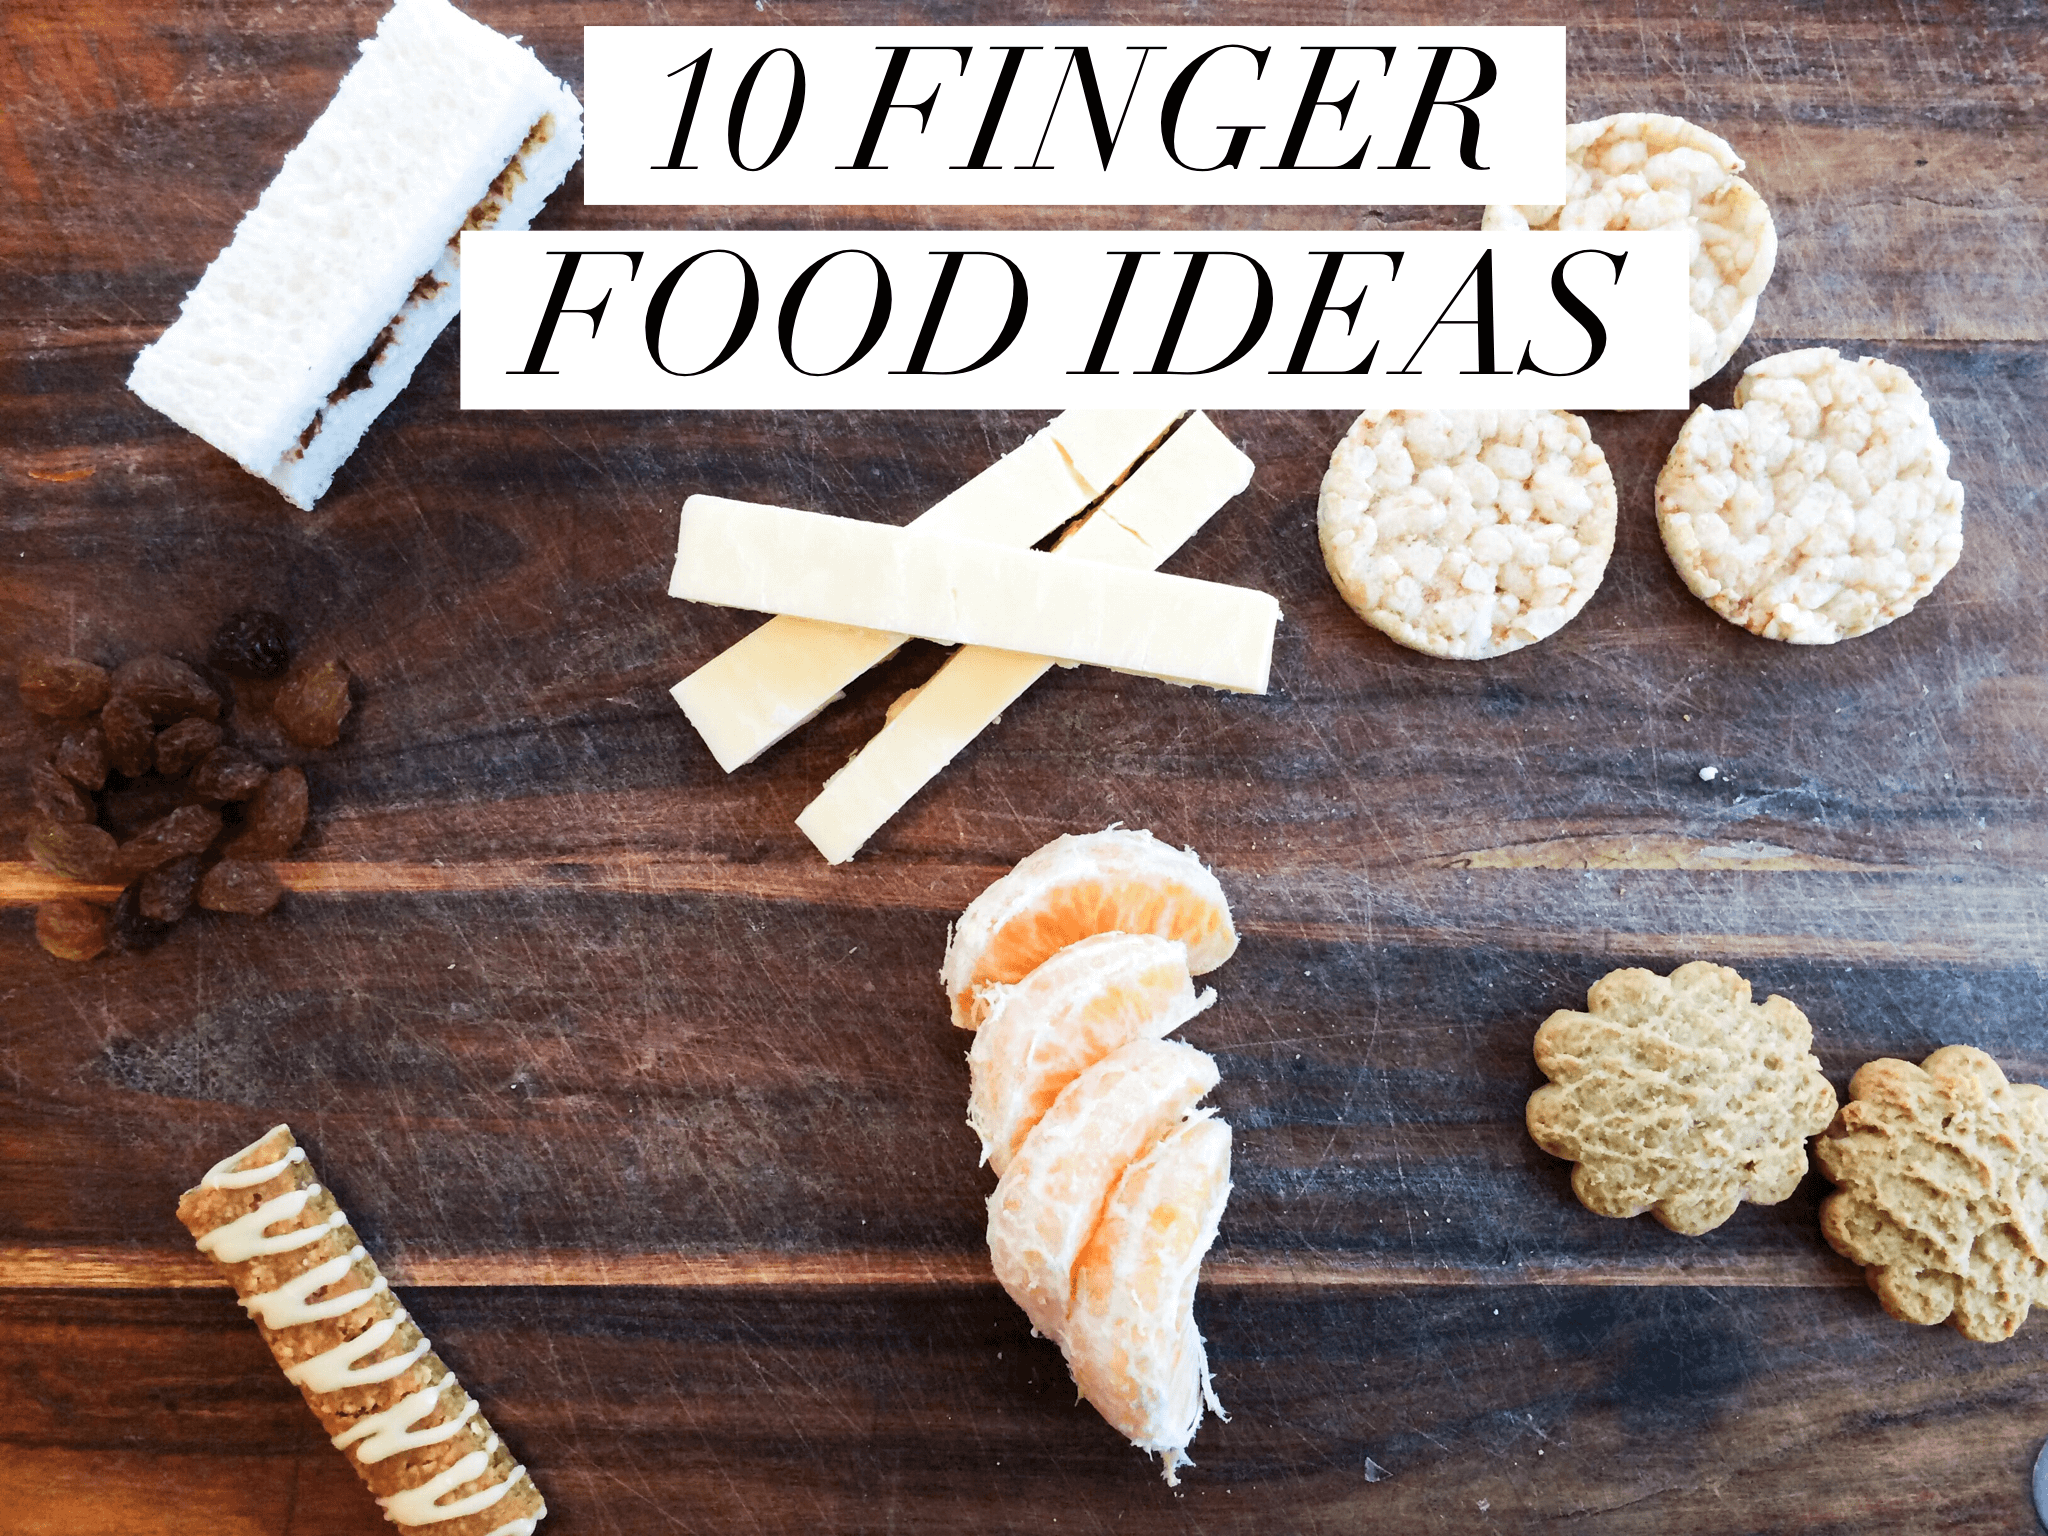 Finger food ideas